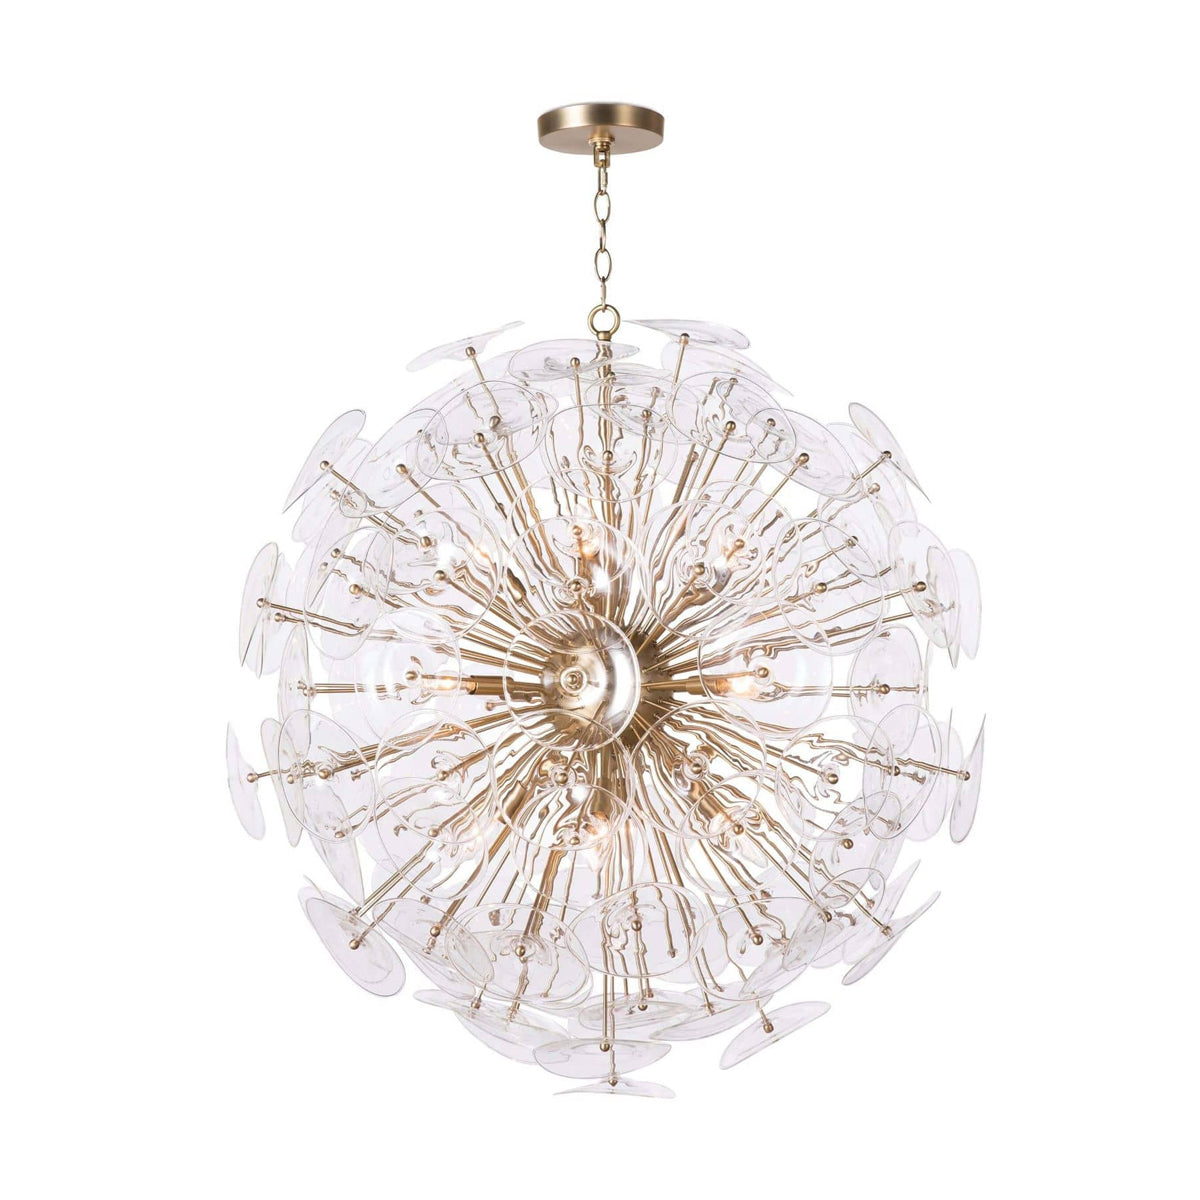 regina andrew poppy glass chandelier clear chandeliers 